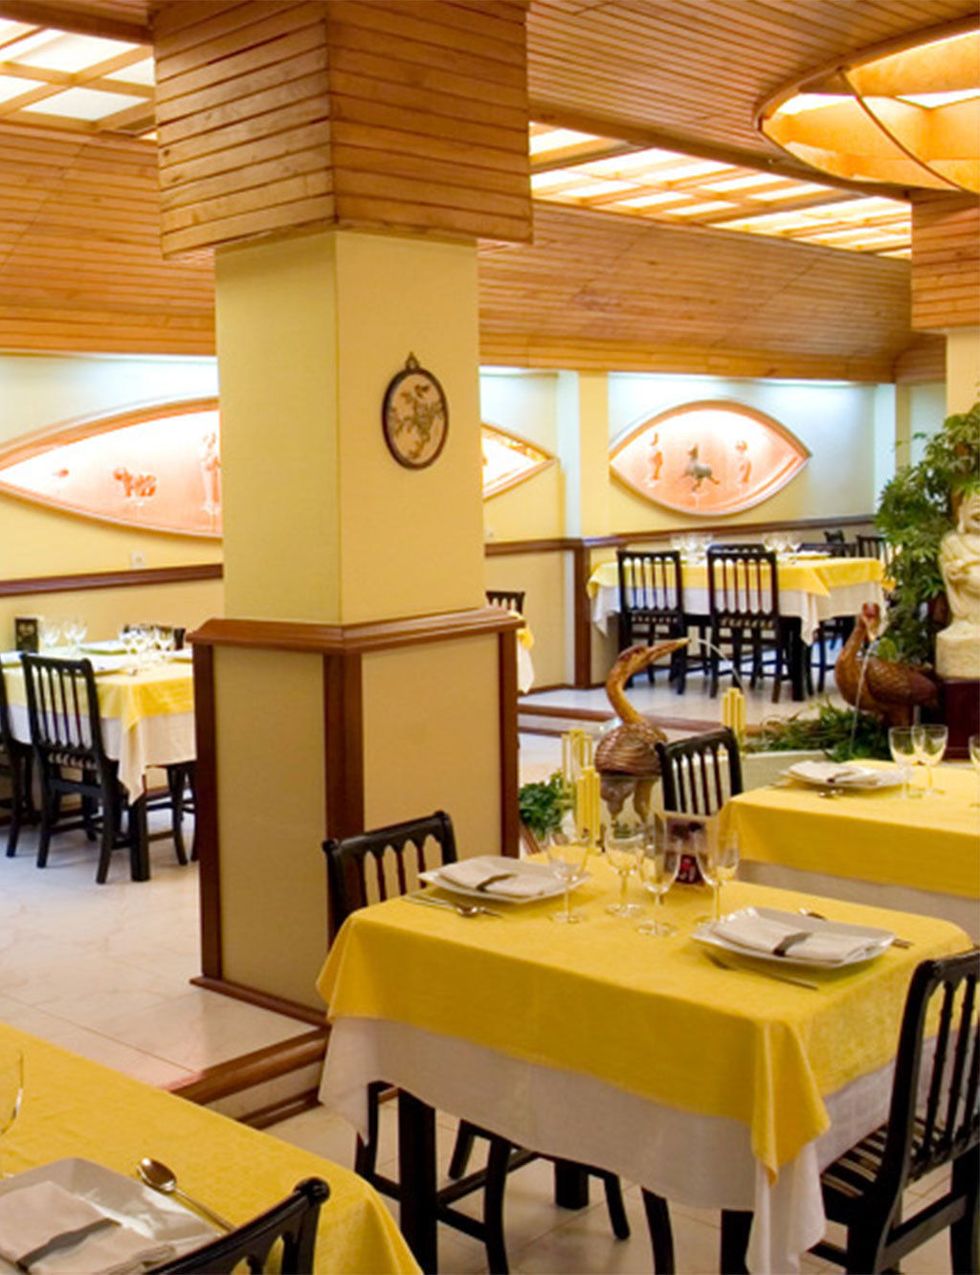 Restaurant, Yellow, Building, Interior design, Room, Café, Cafeteria, Brunch, Ceiling, Table, 